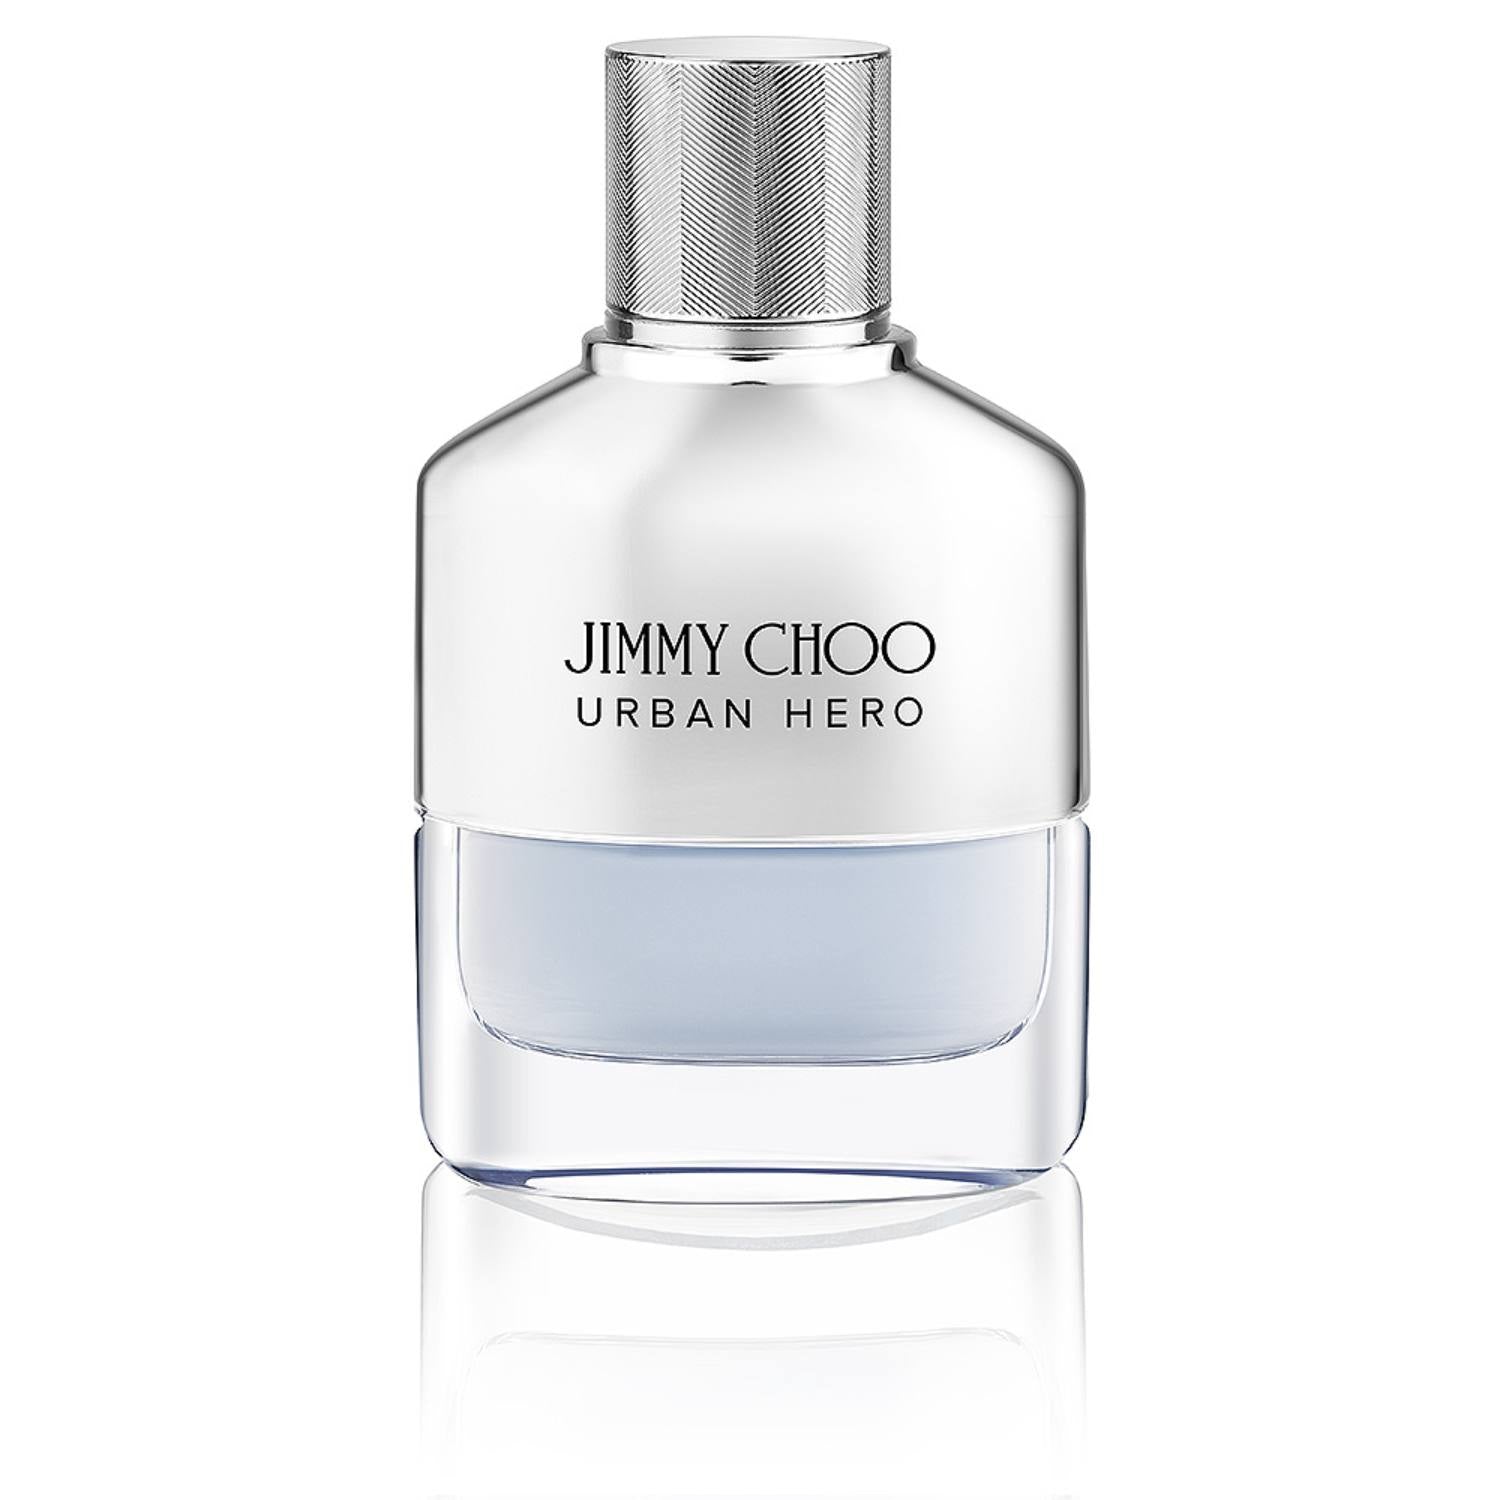 JIMMY CHOO URBAN HERO eau de Parfum Spray